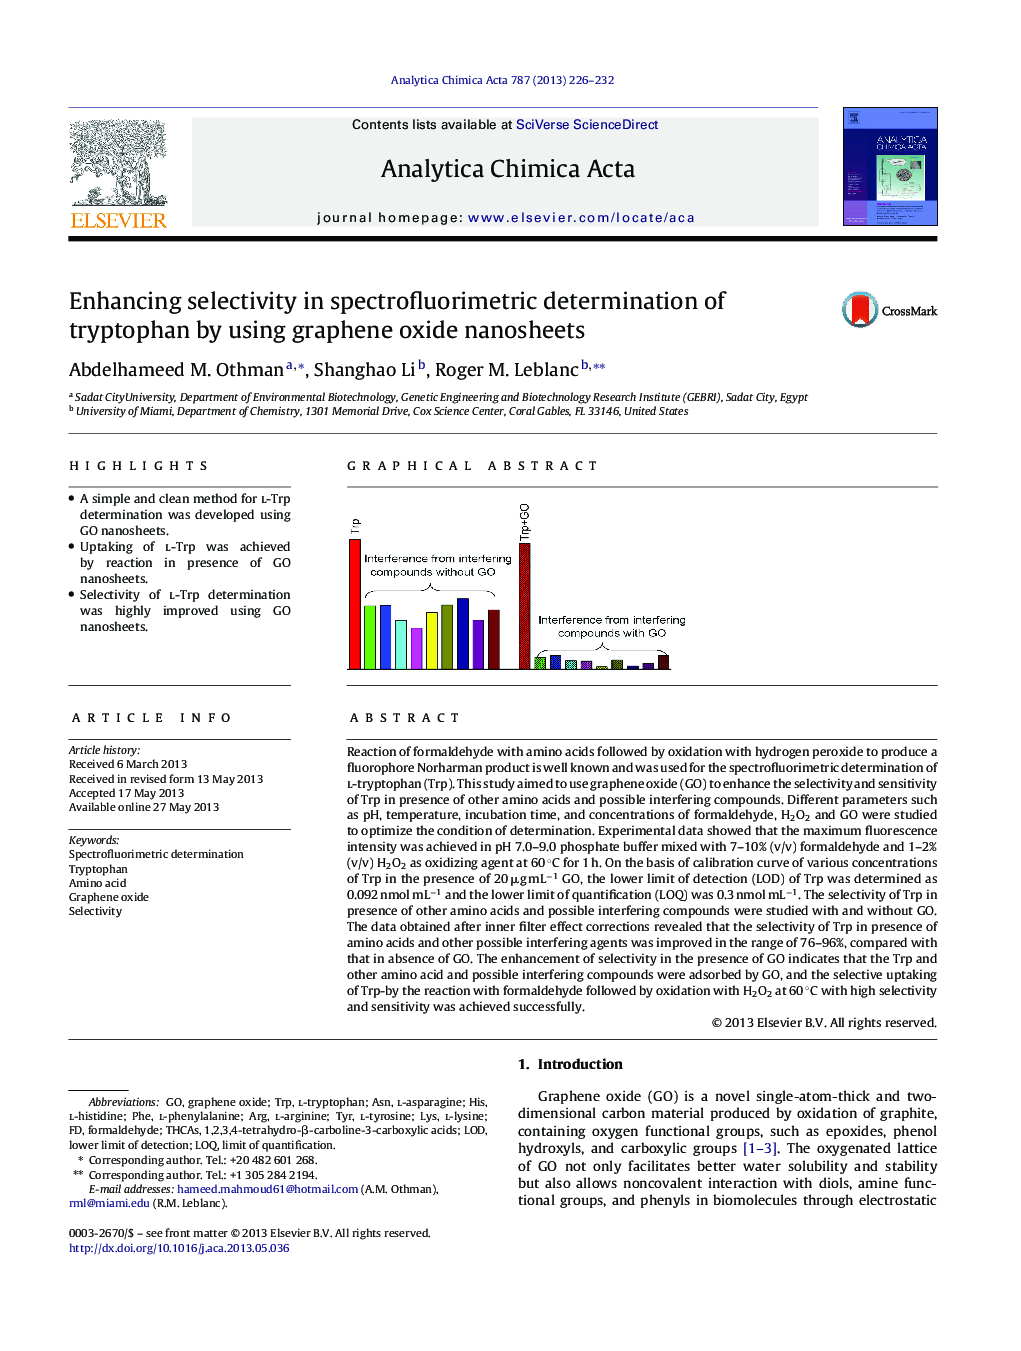 Enhancing selectivity in spectrofluorimetric determination of tryptophan by using graphene oxide nanosheets